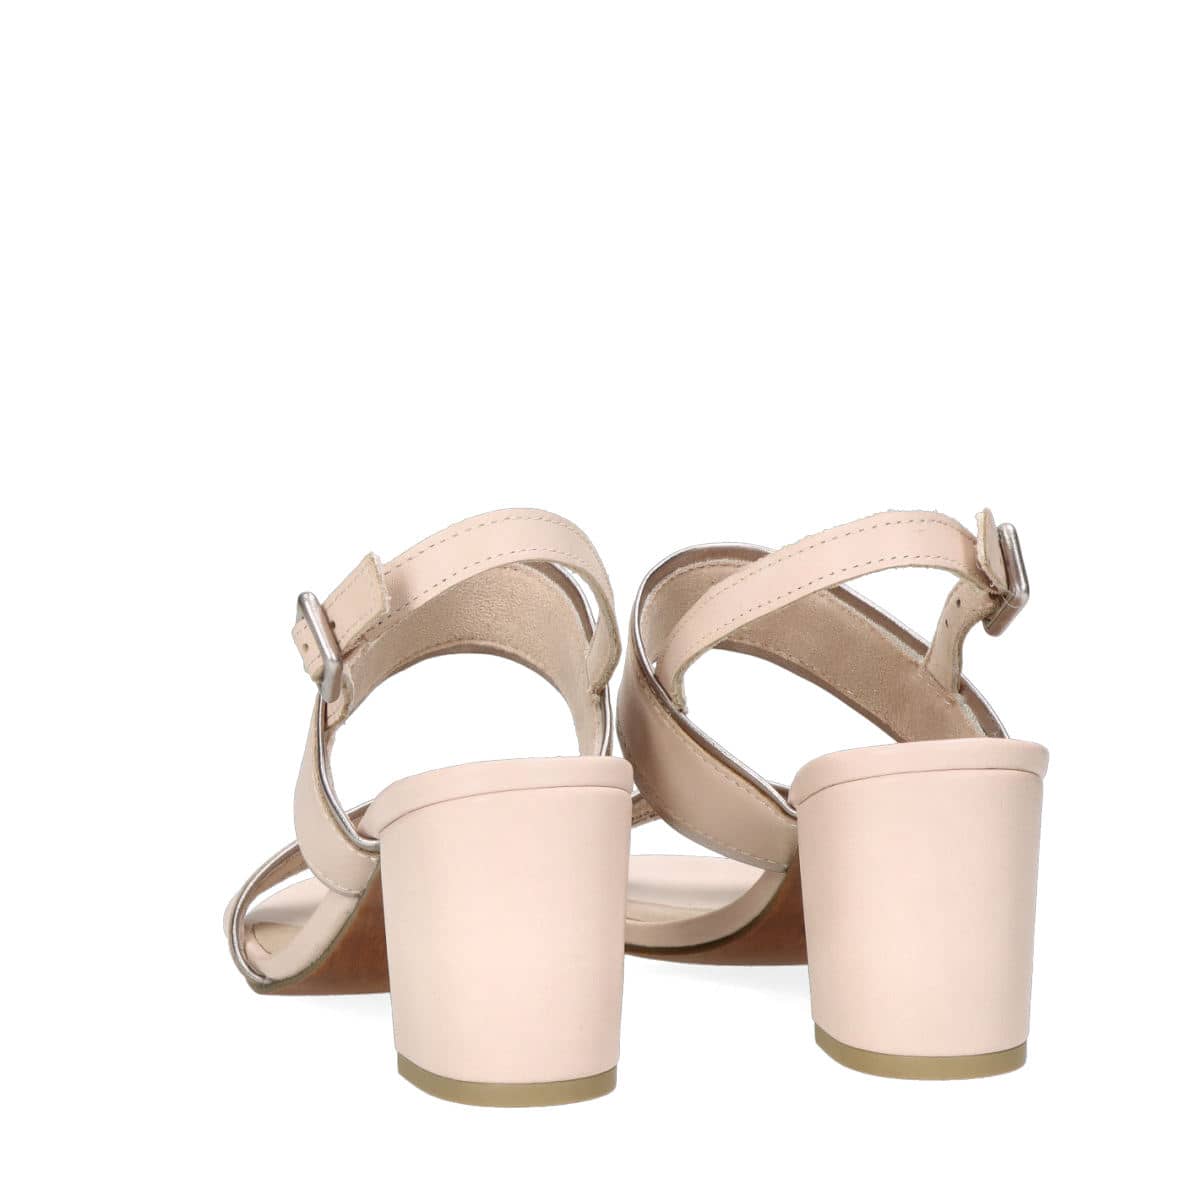 Pink High Heel Sandals - Woven Sandals - Braided Sandals - Lulus